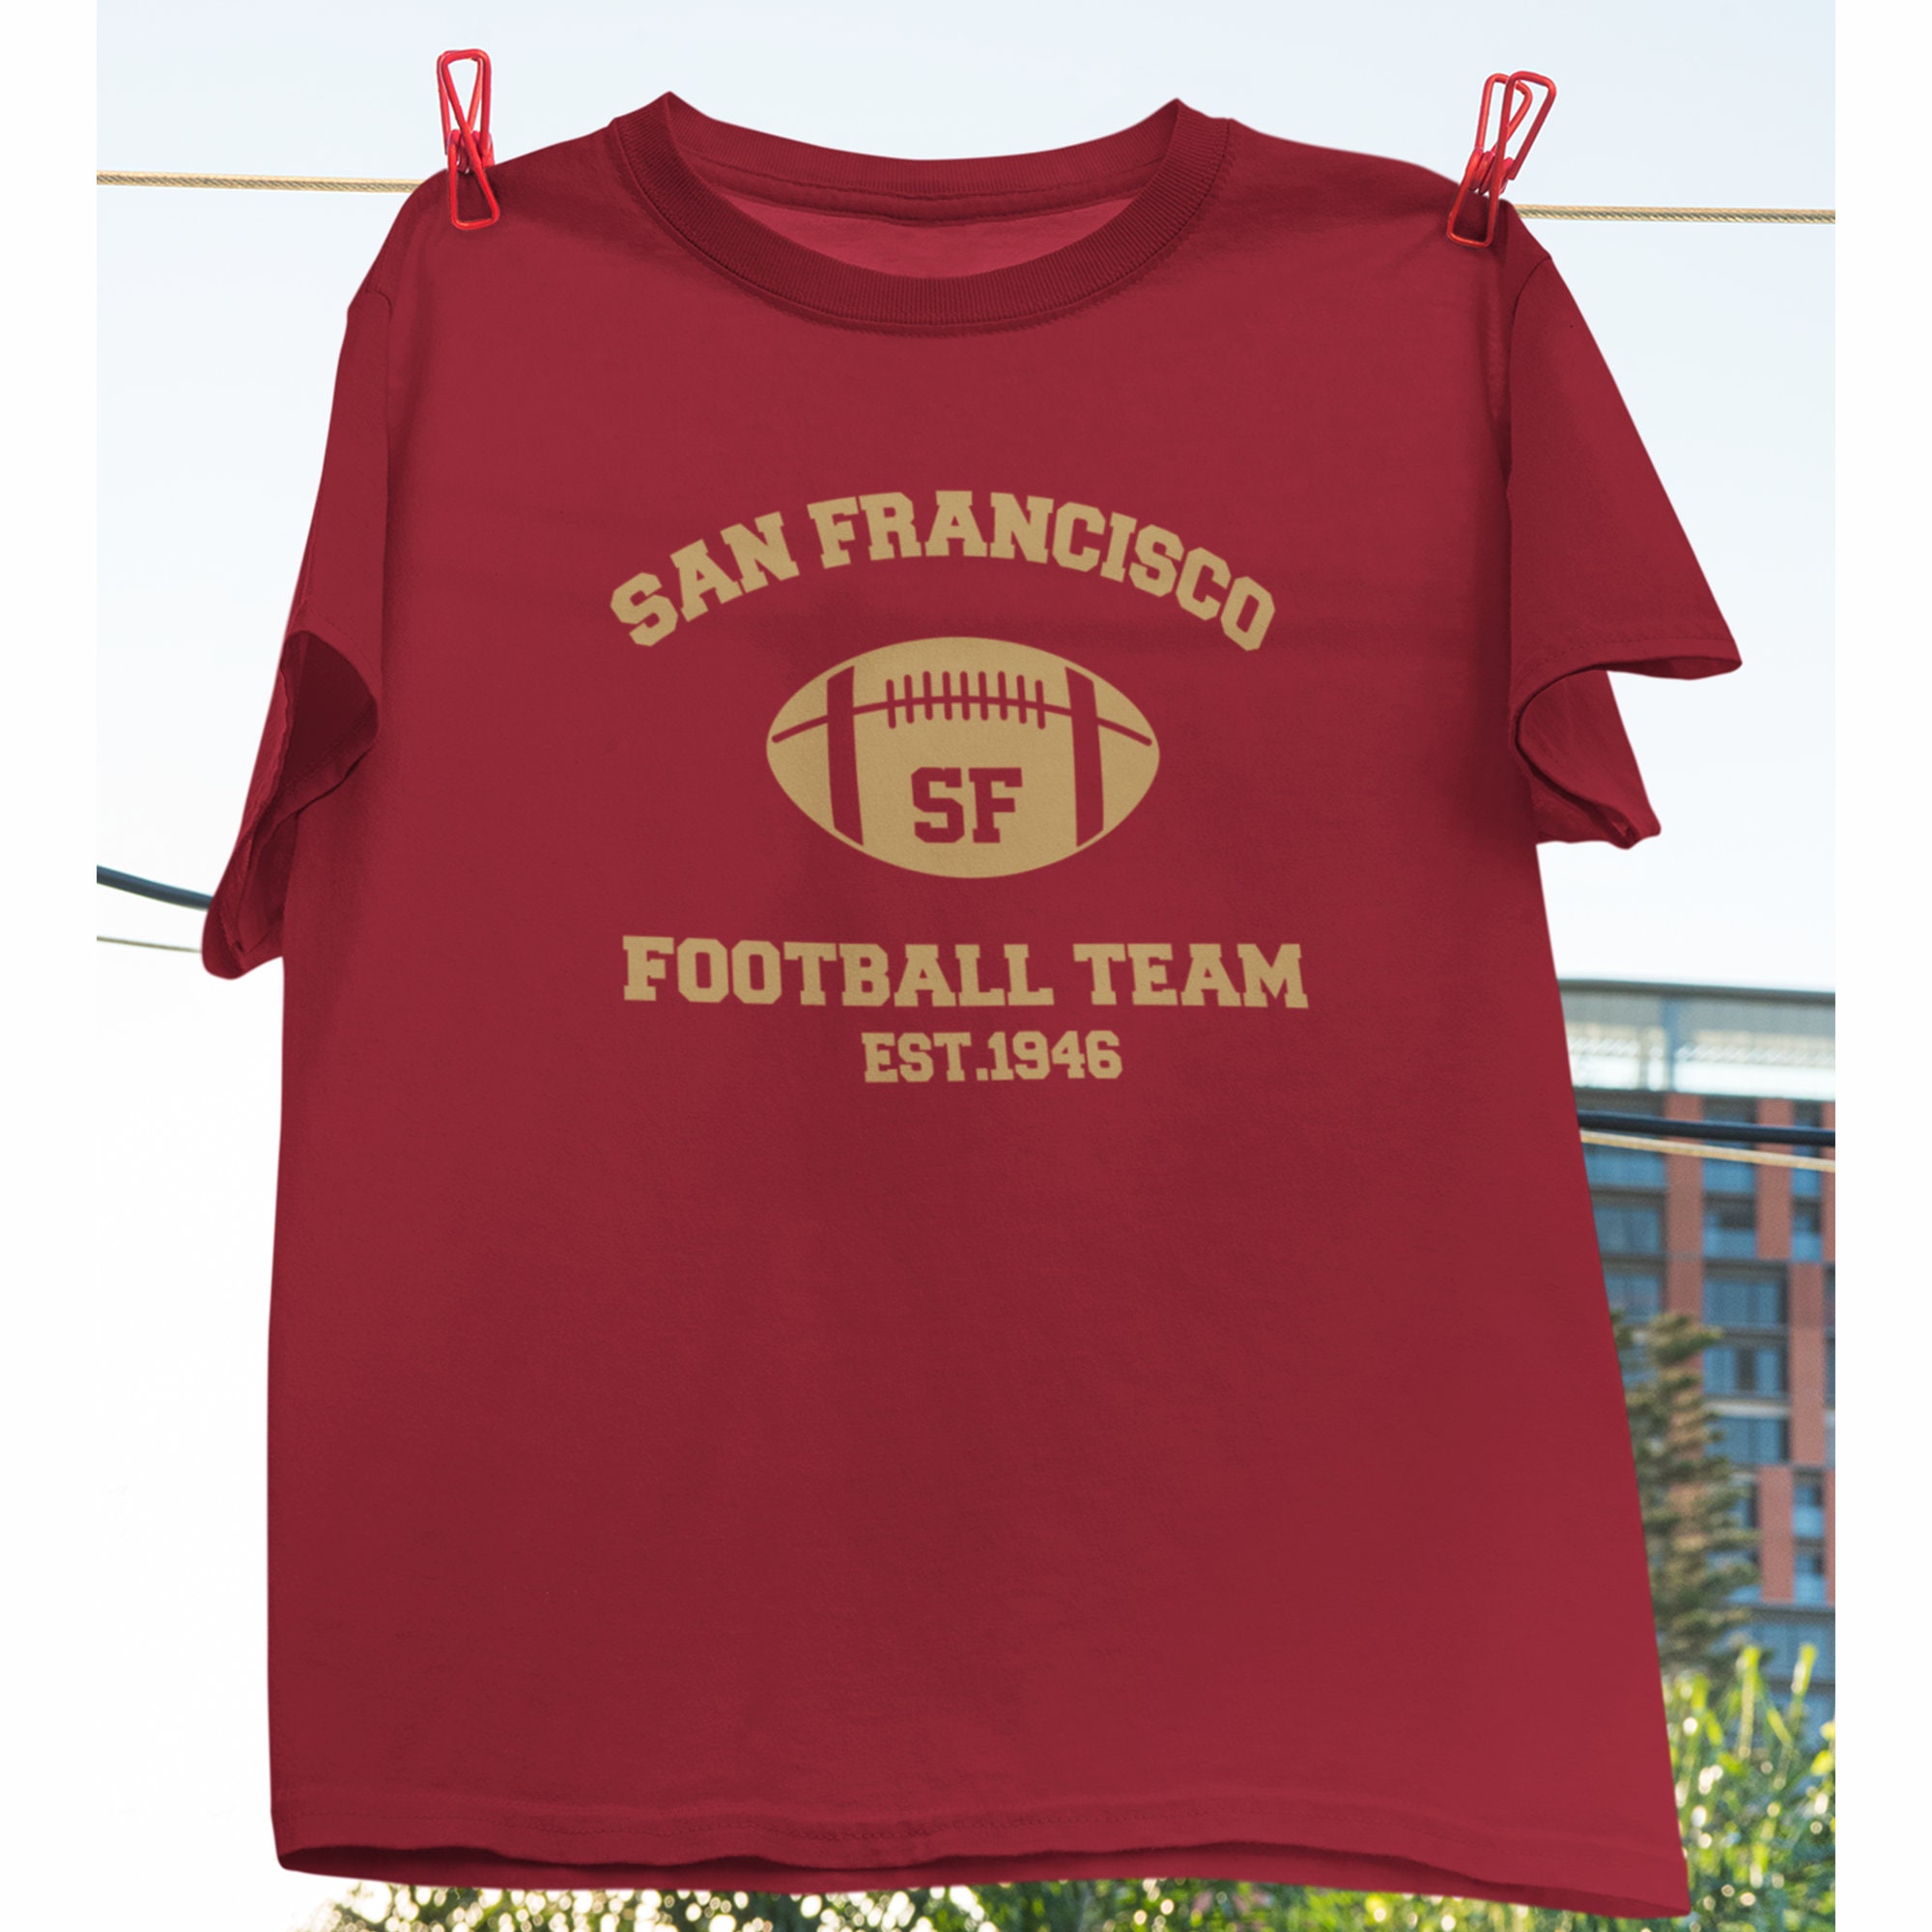 Discover San Francisco football team est 1946  T-Shirt